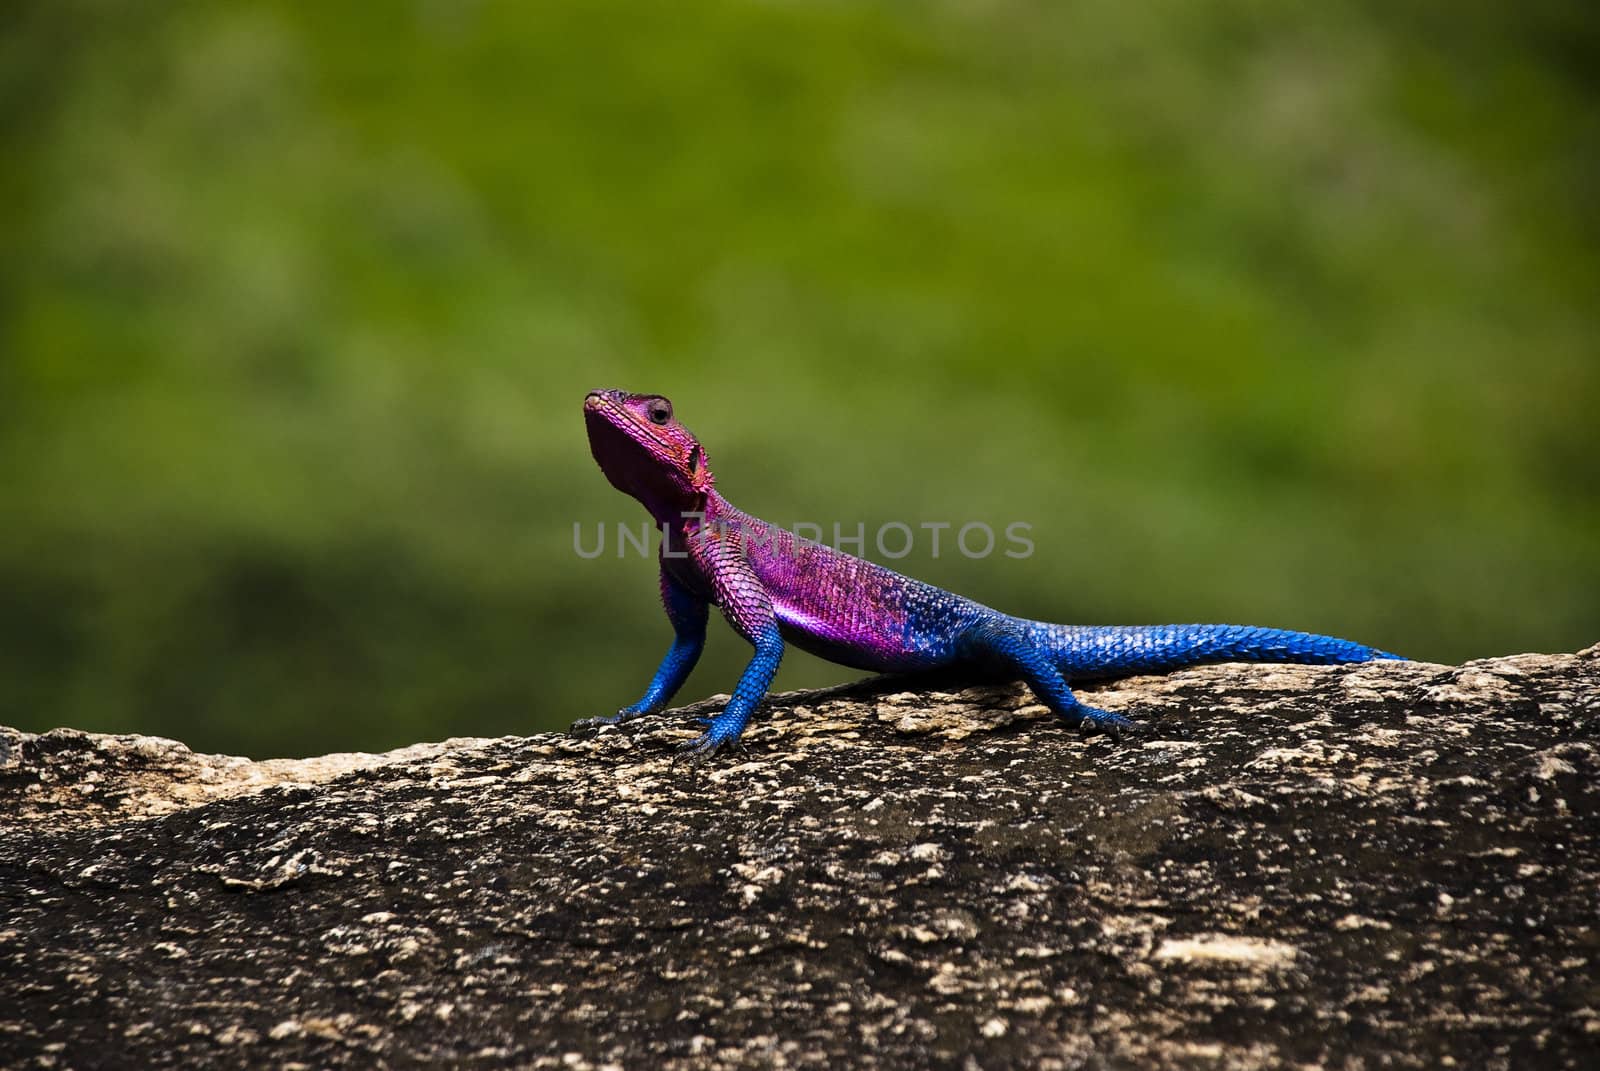 Agama Lizard by bah69